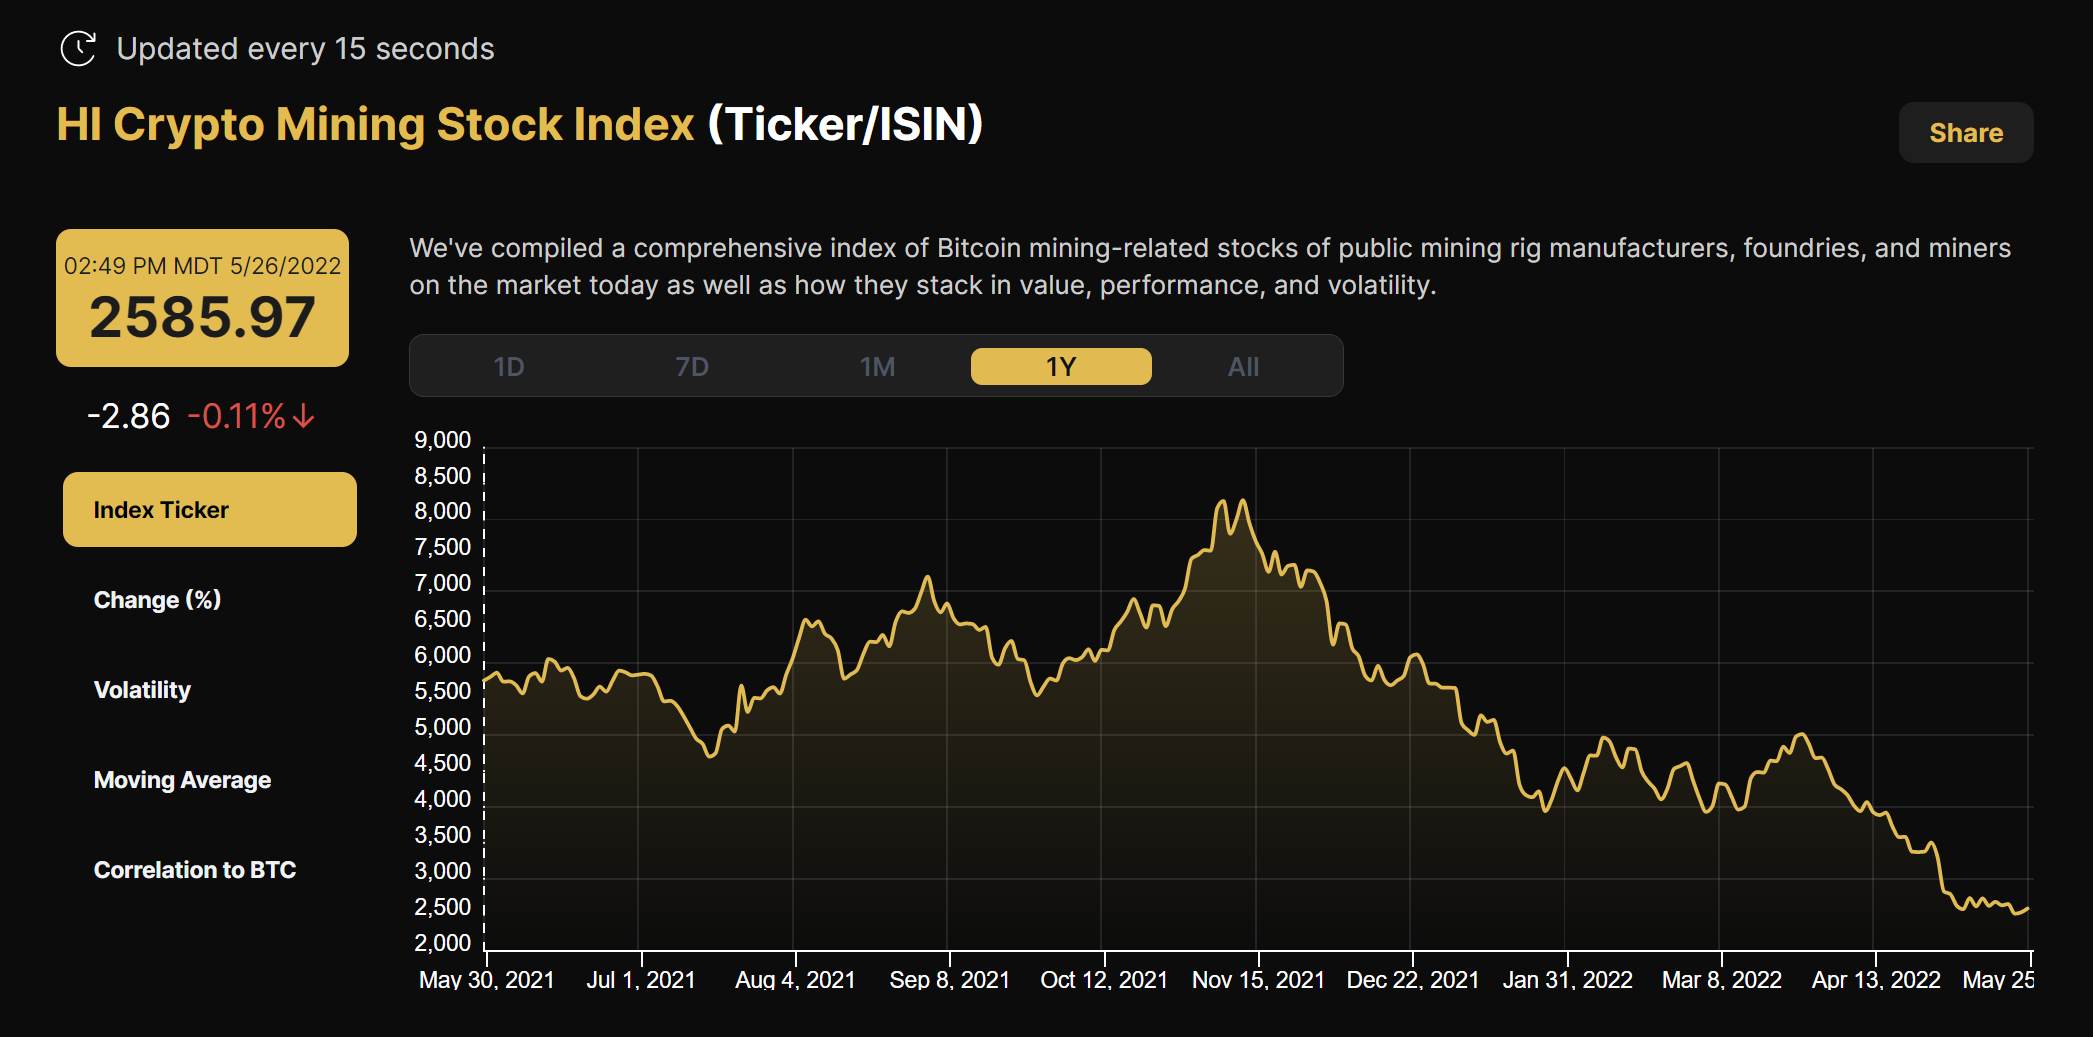 Hashrate Index Crypto Mining Stock Index (May 22 - May 27, 2022)